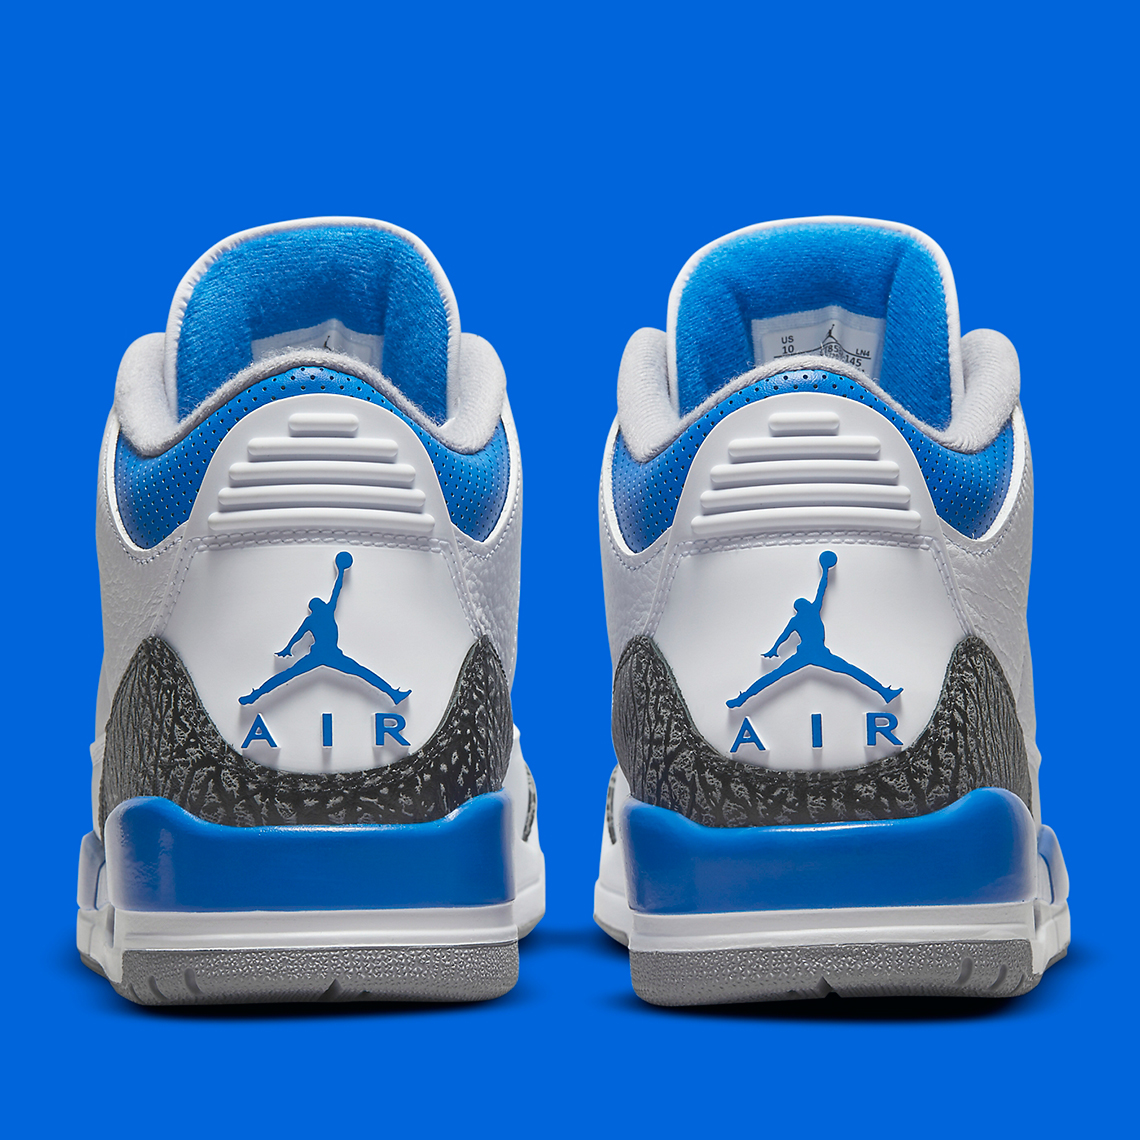 Air NikeLabs Jordan 3 Racer Blue Ct8532 145 Release Date 6